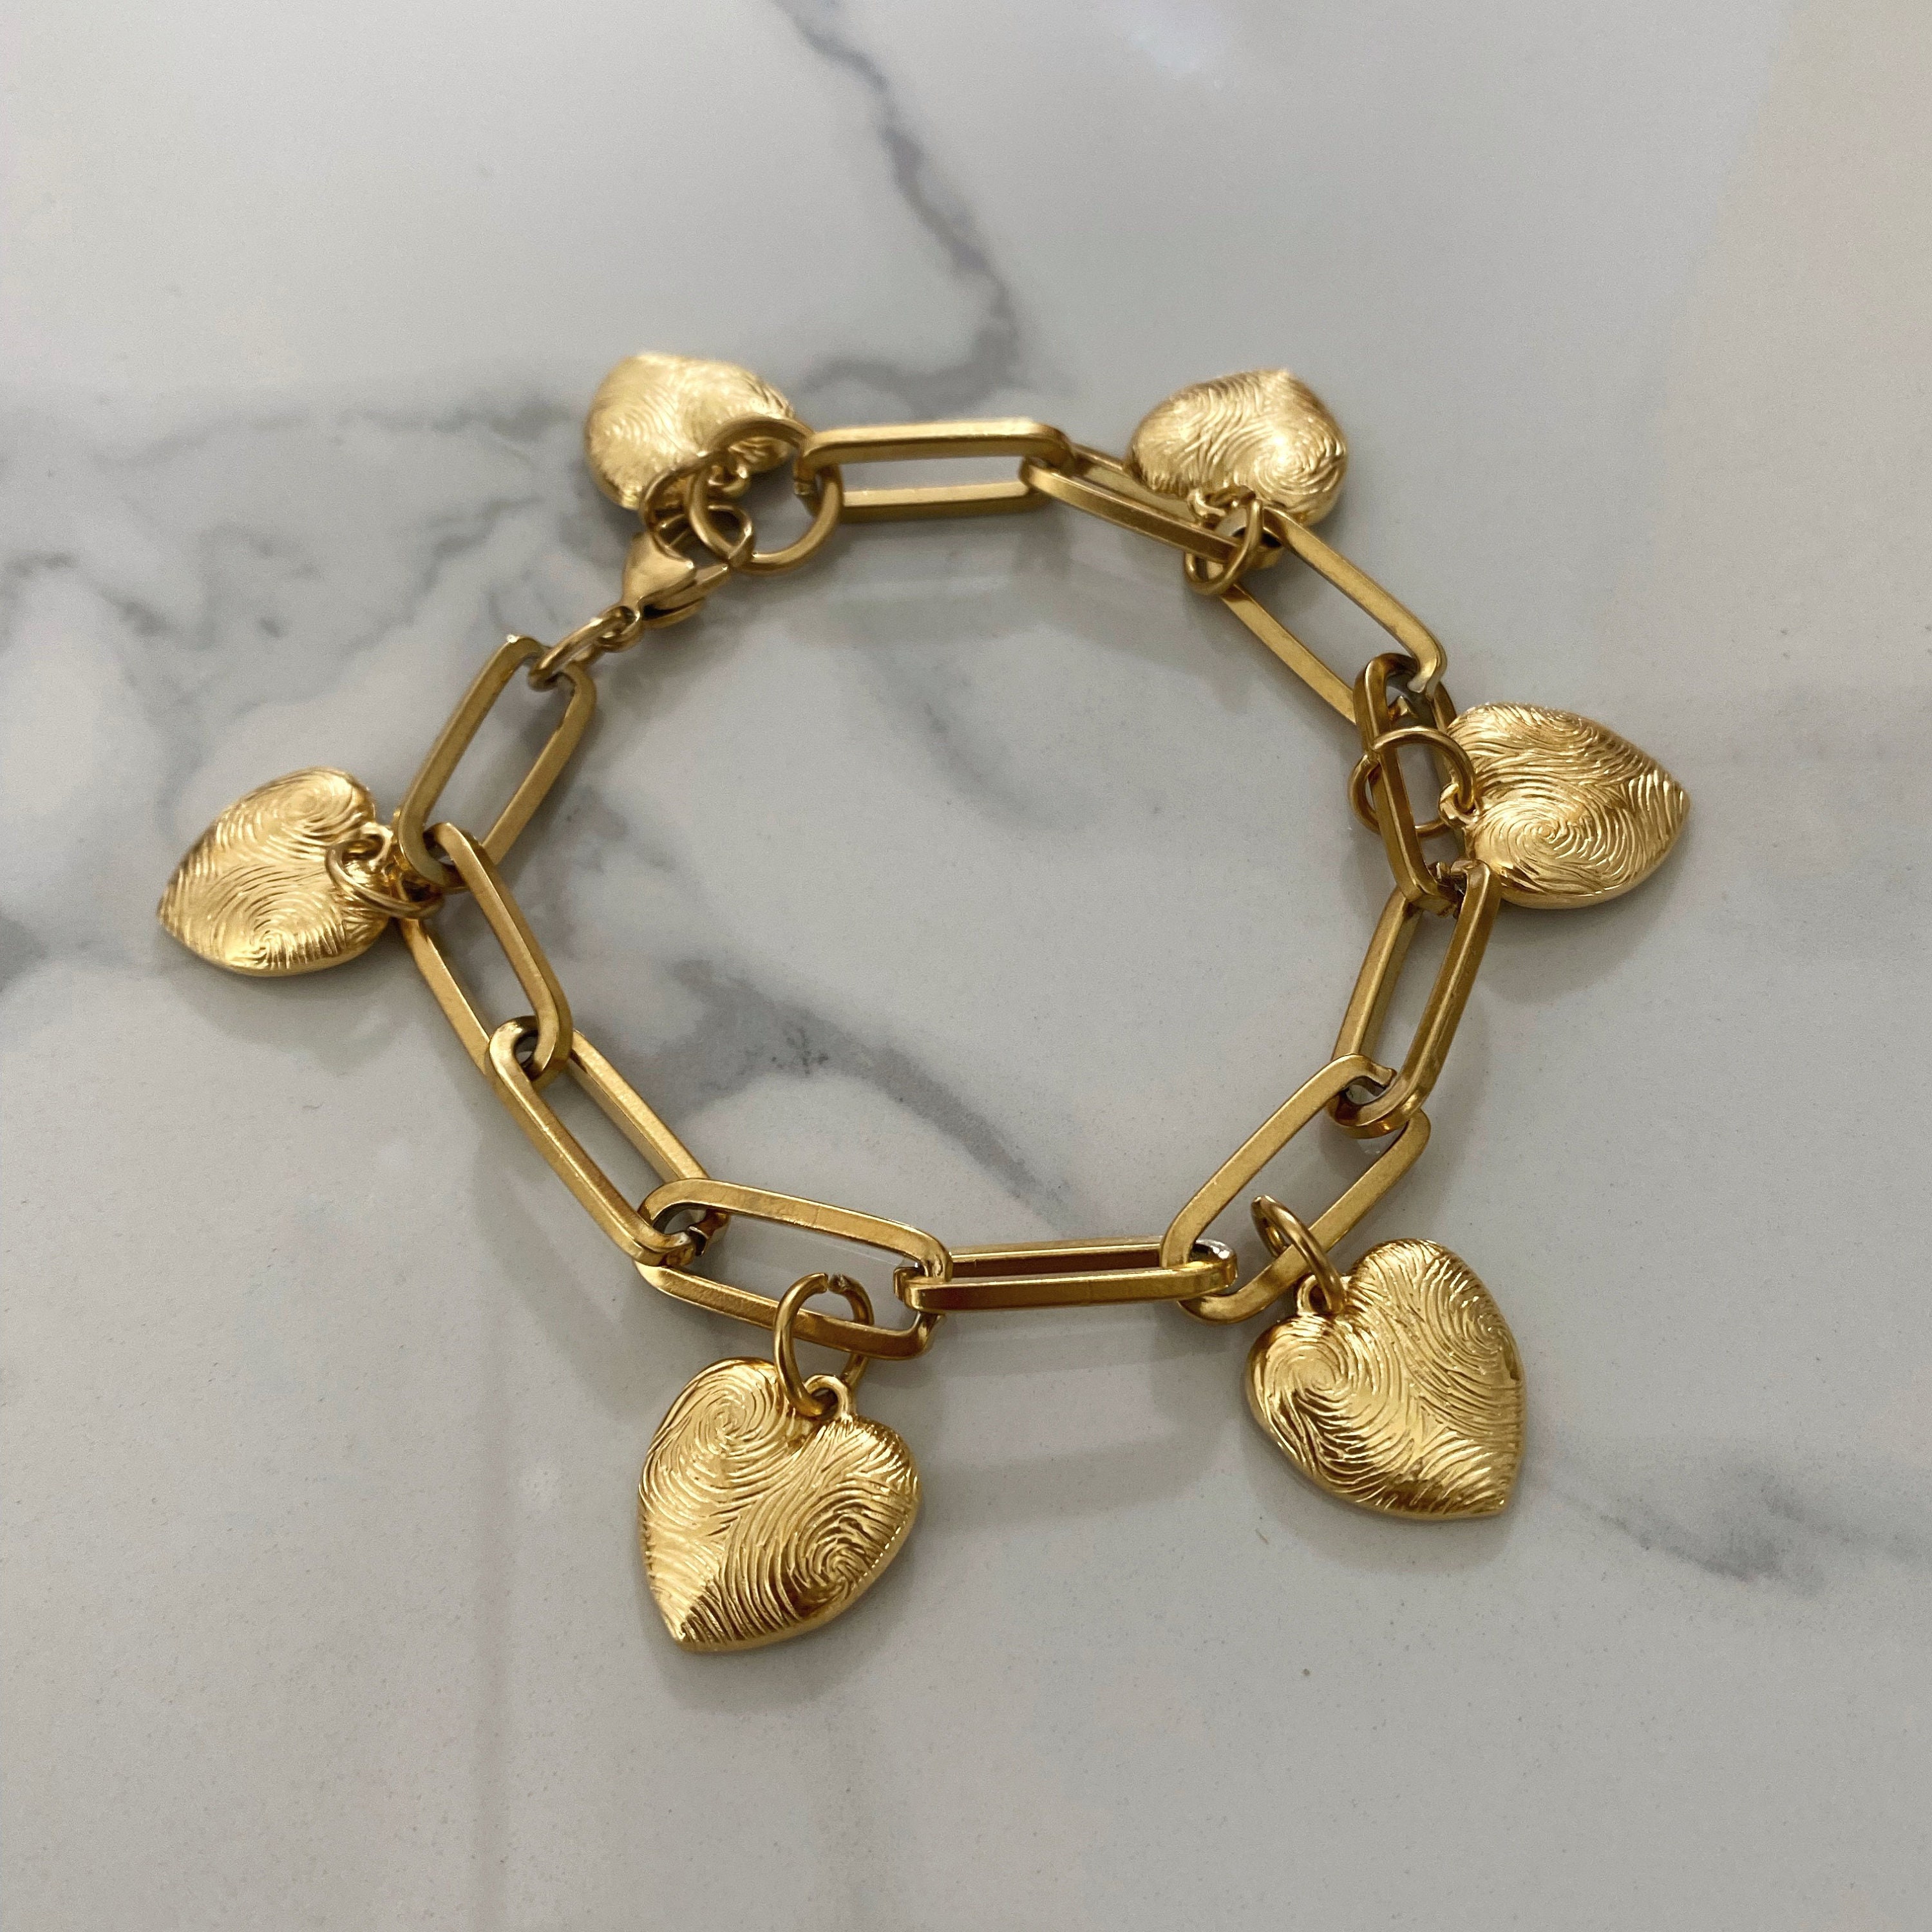 14K Yellow Gold Heart Lock Charm Link Bracelet (7.50 inches) - Walmart.com